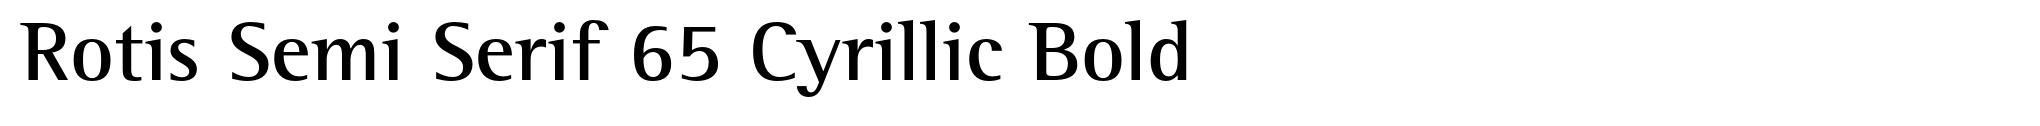 Rotis Semi Serif 65 Cyrillic Bold image